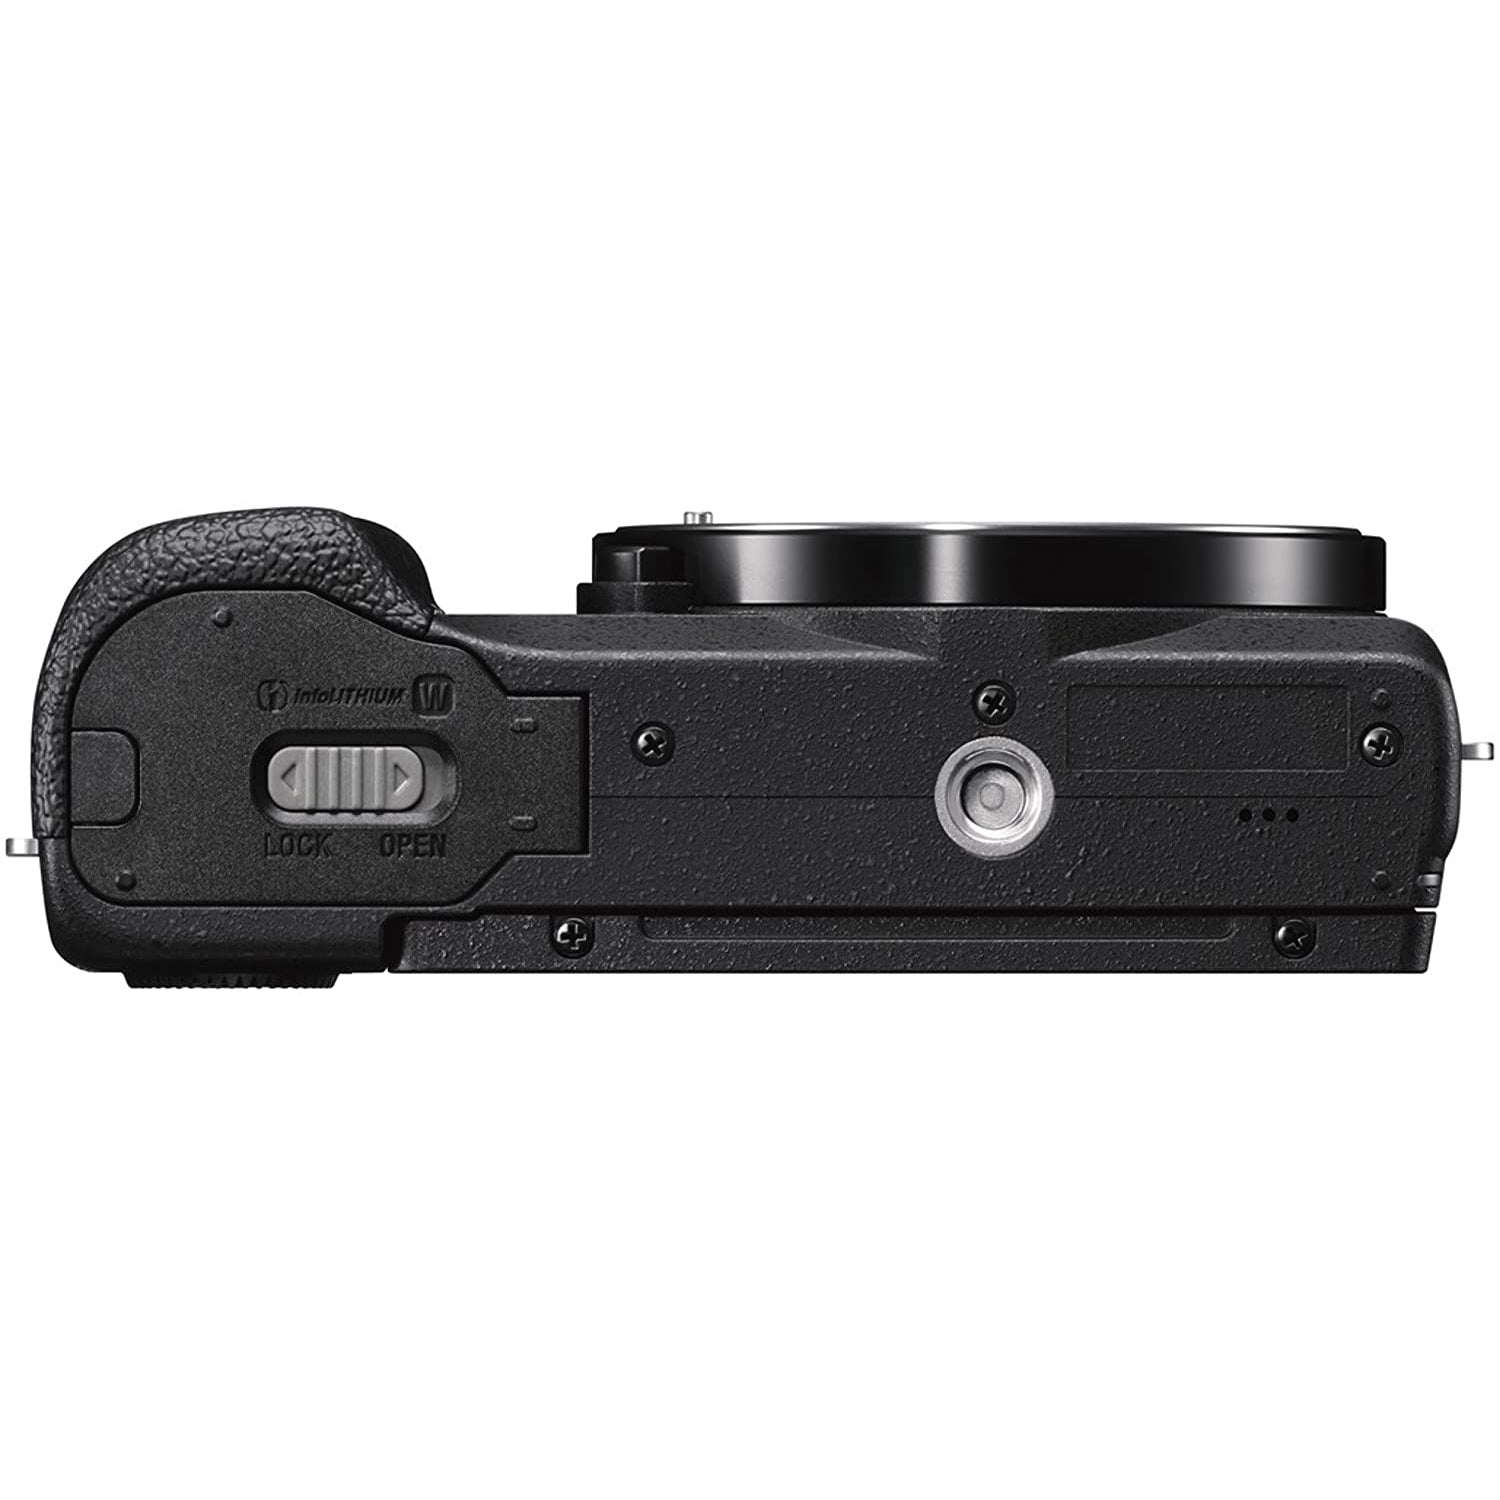 Sony ILCE A5100 Digital Camera - Black